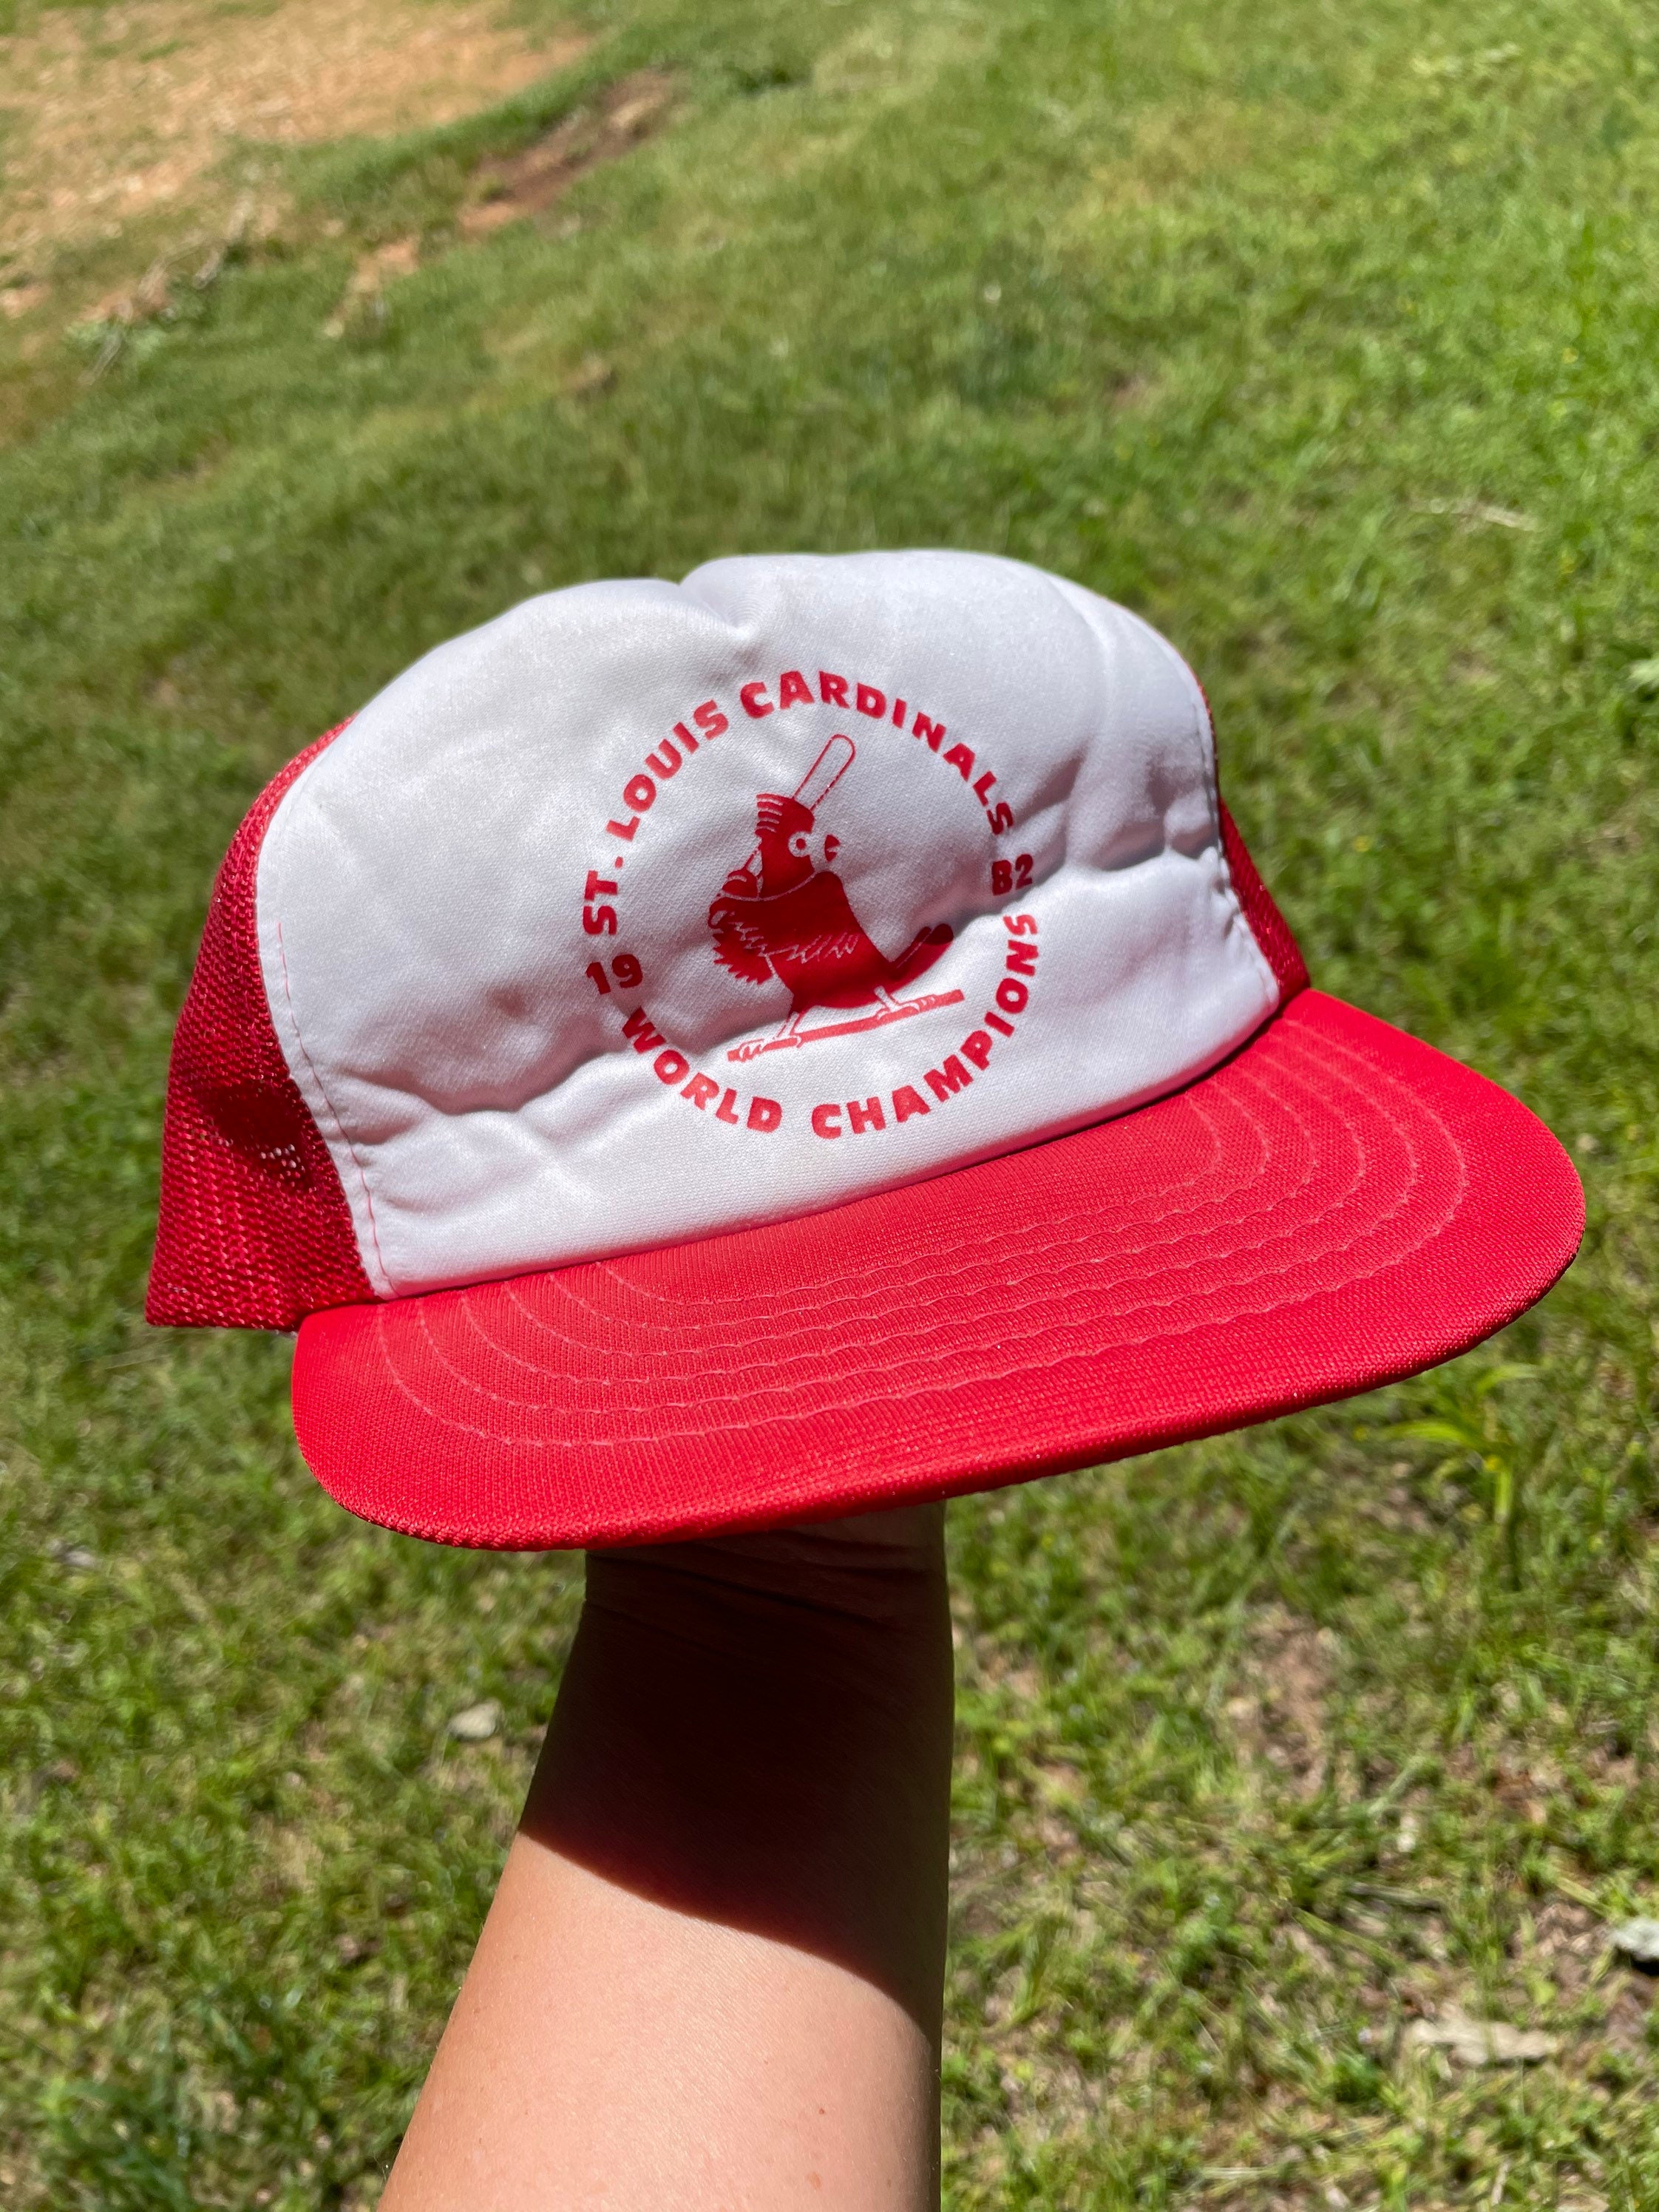 St. Louis Cardinals World Champions 1982 Trucker Hat -  UK